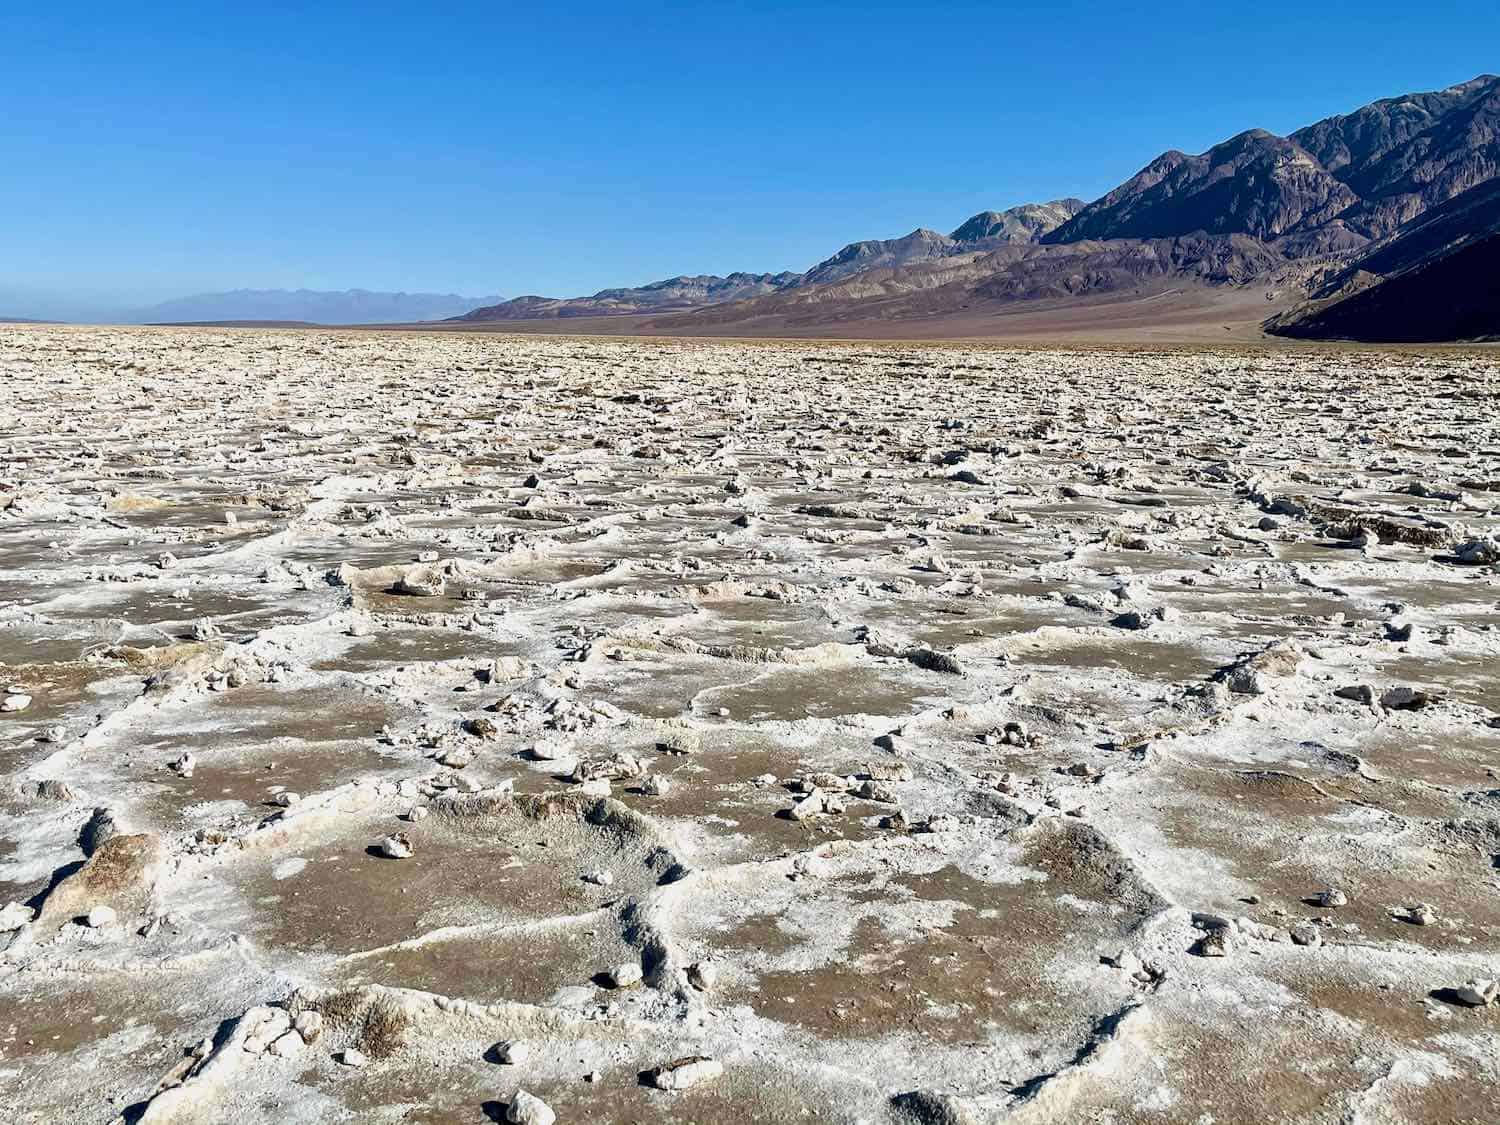 Salt crystals form in the desert at Death Valley National Park.